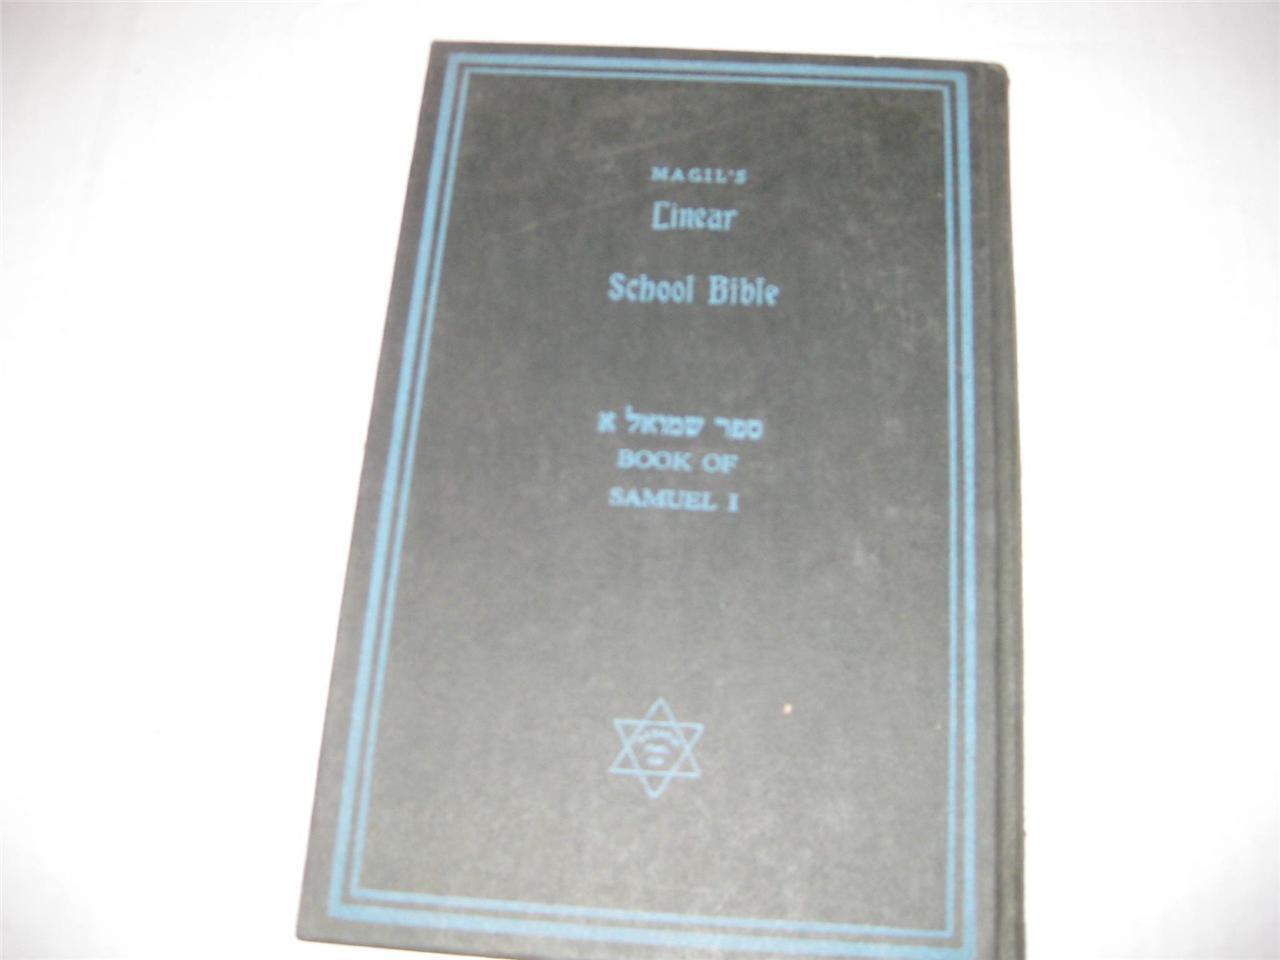 Magil\'s Linear Jewish SAMUEL I SHMUEL I Torah HEBREW ENGLISH